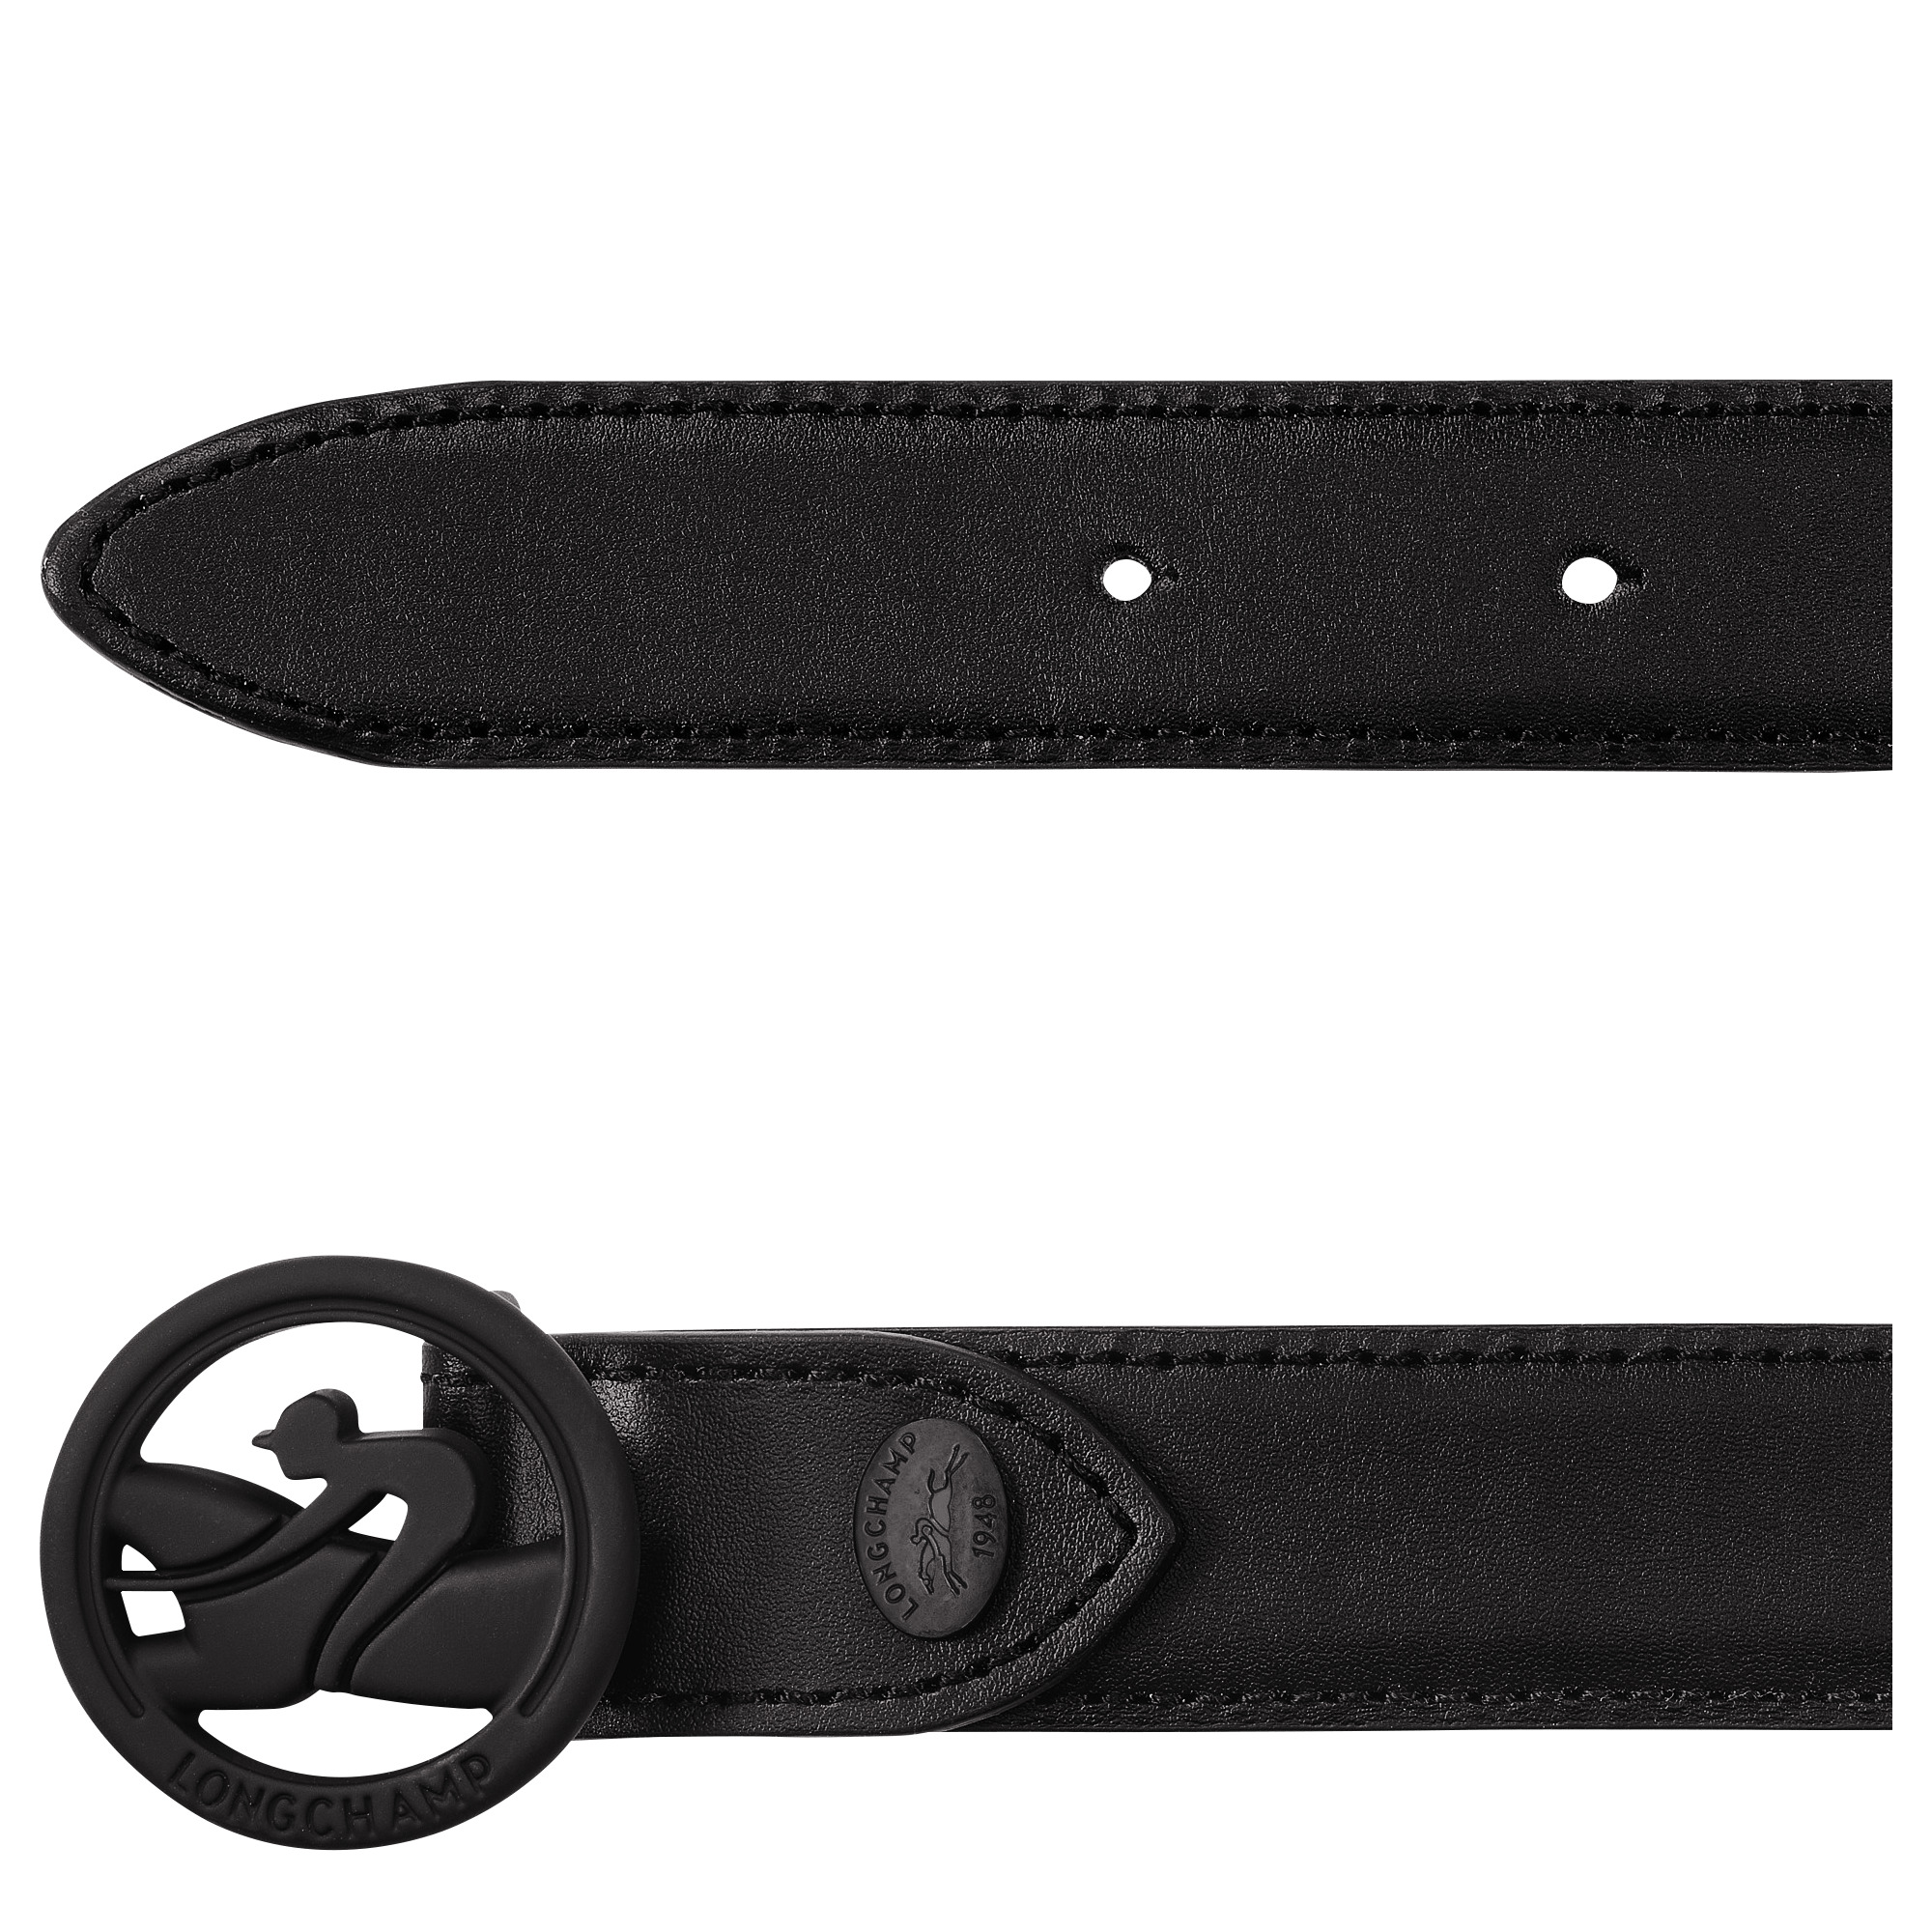 Box-Trot Ladies' belt Black - Leather - 2